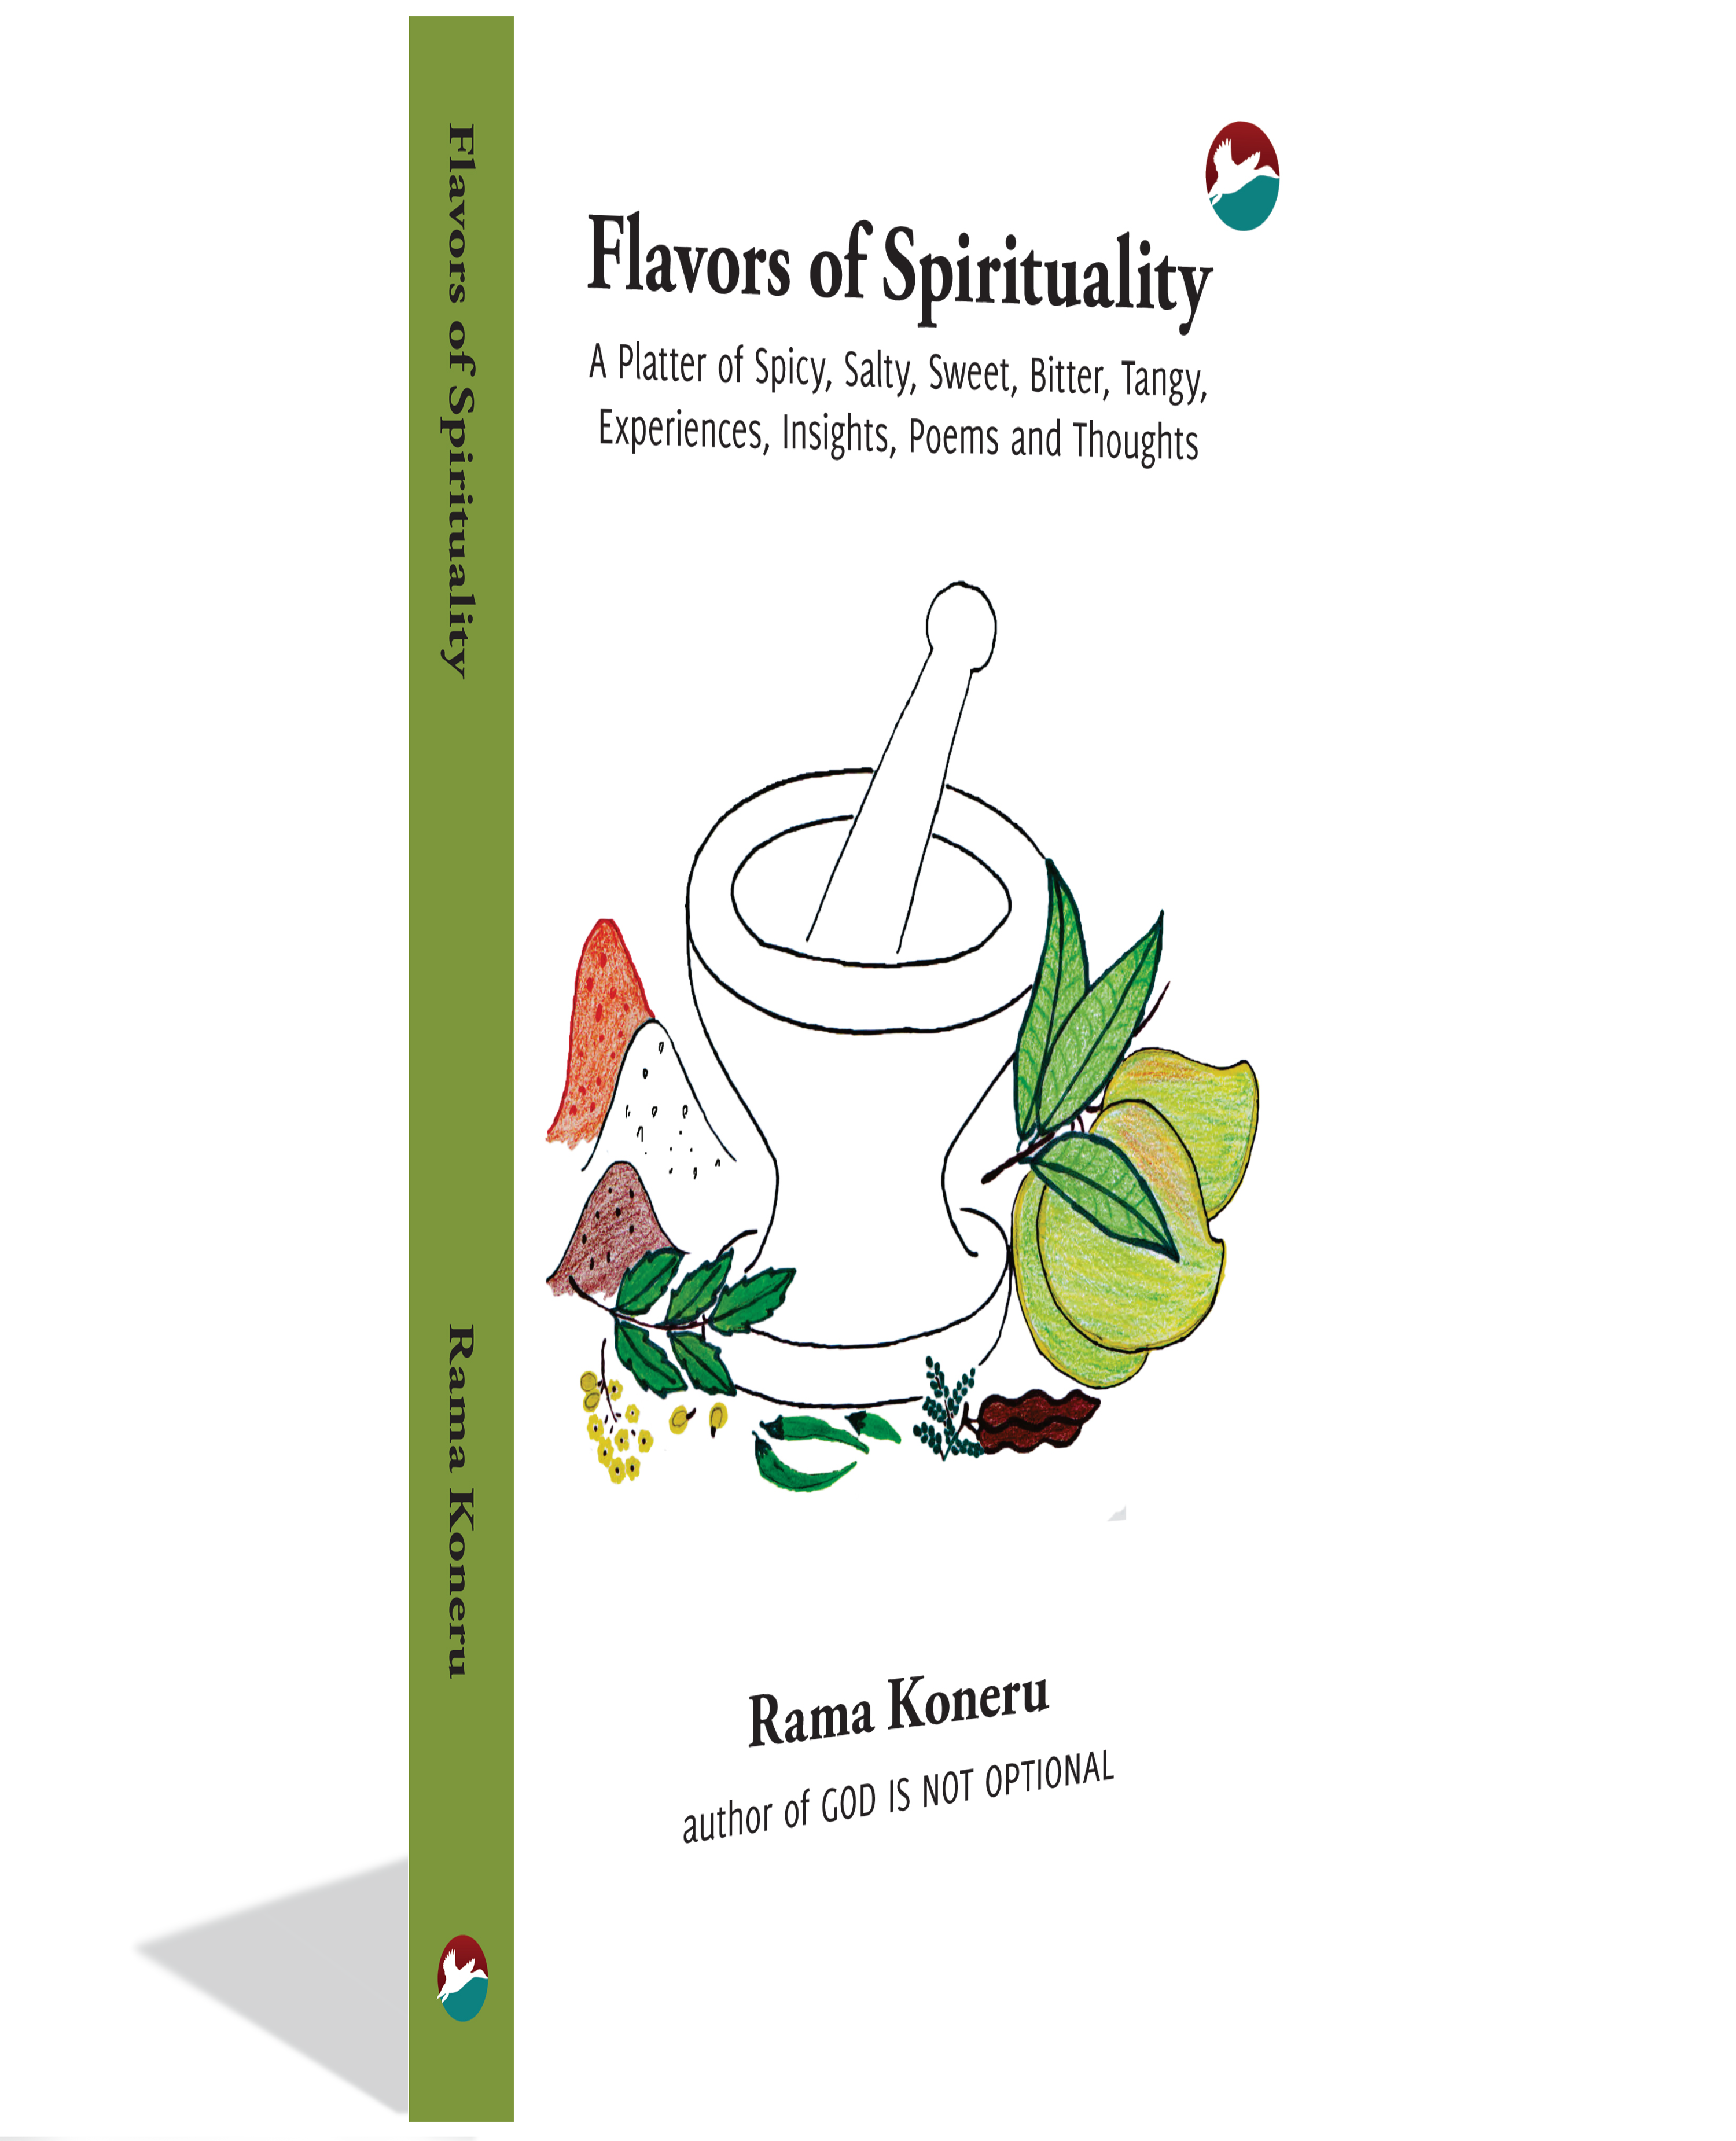 Flavors of Spirituality